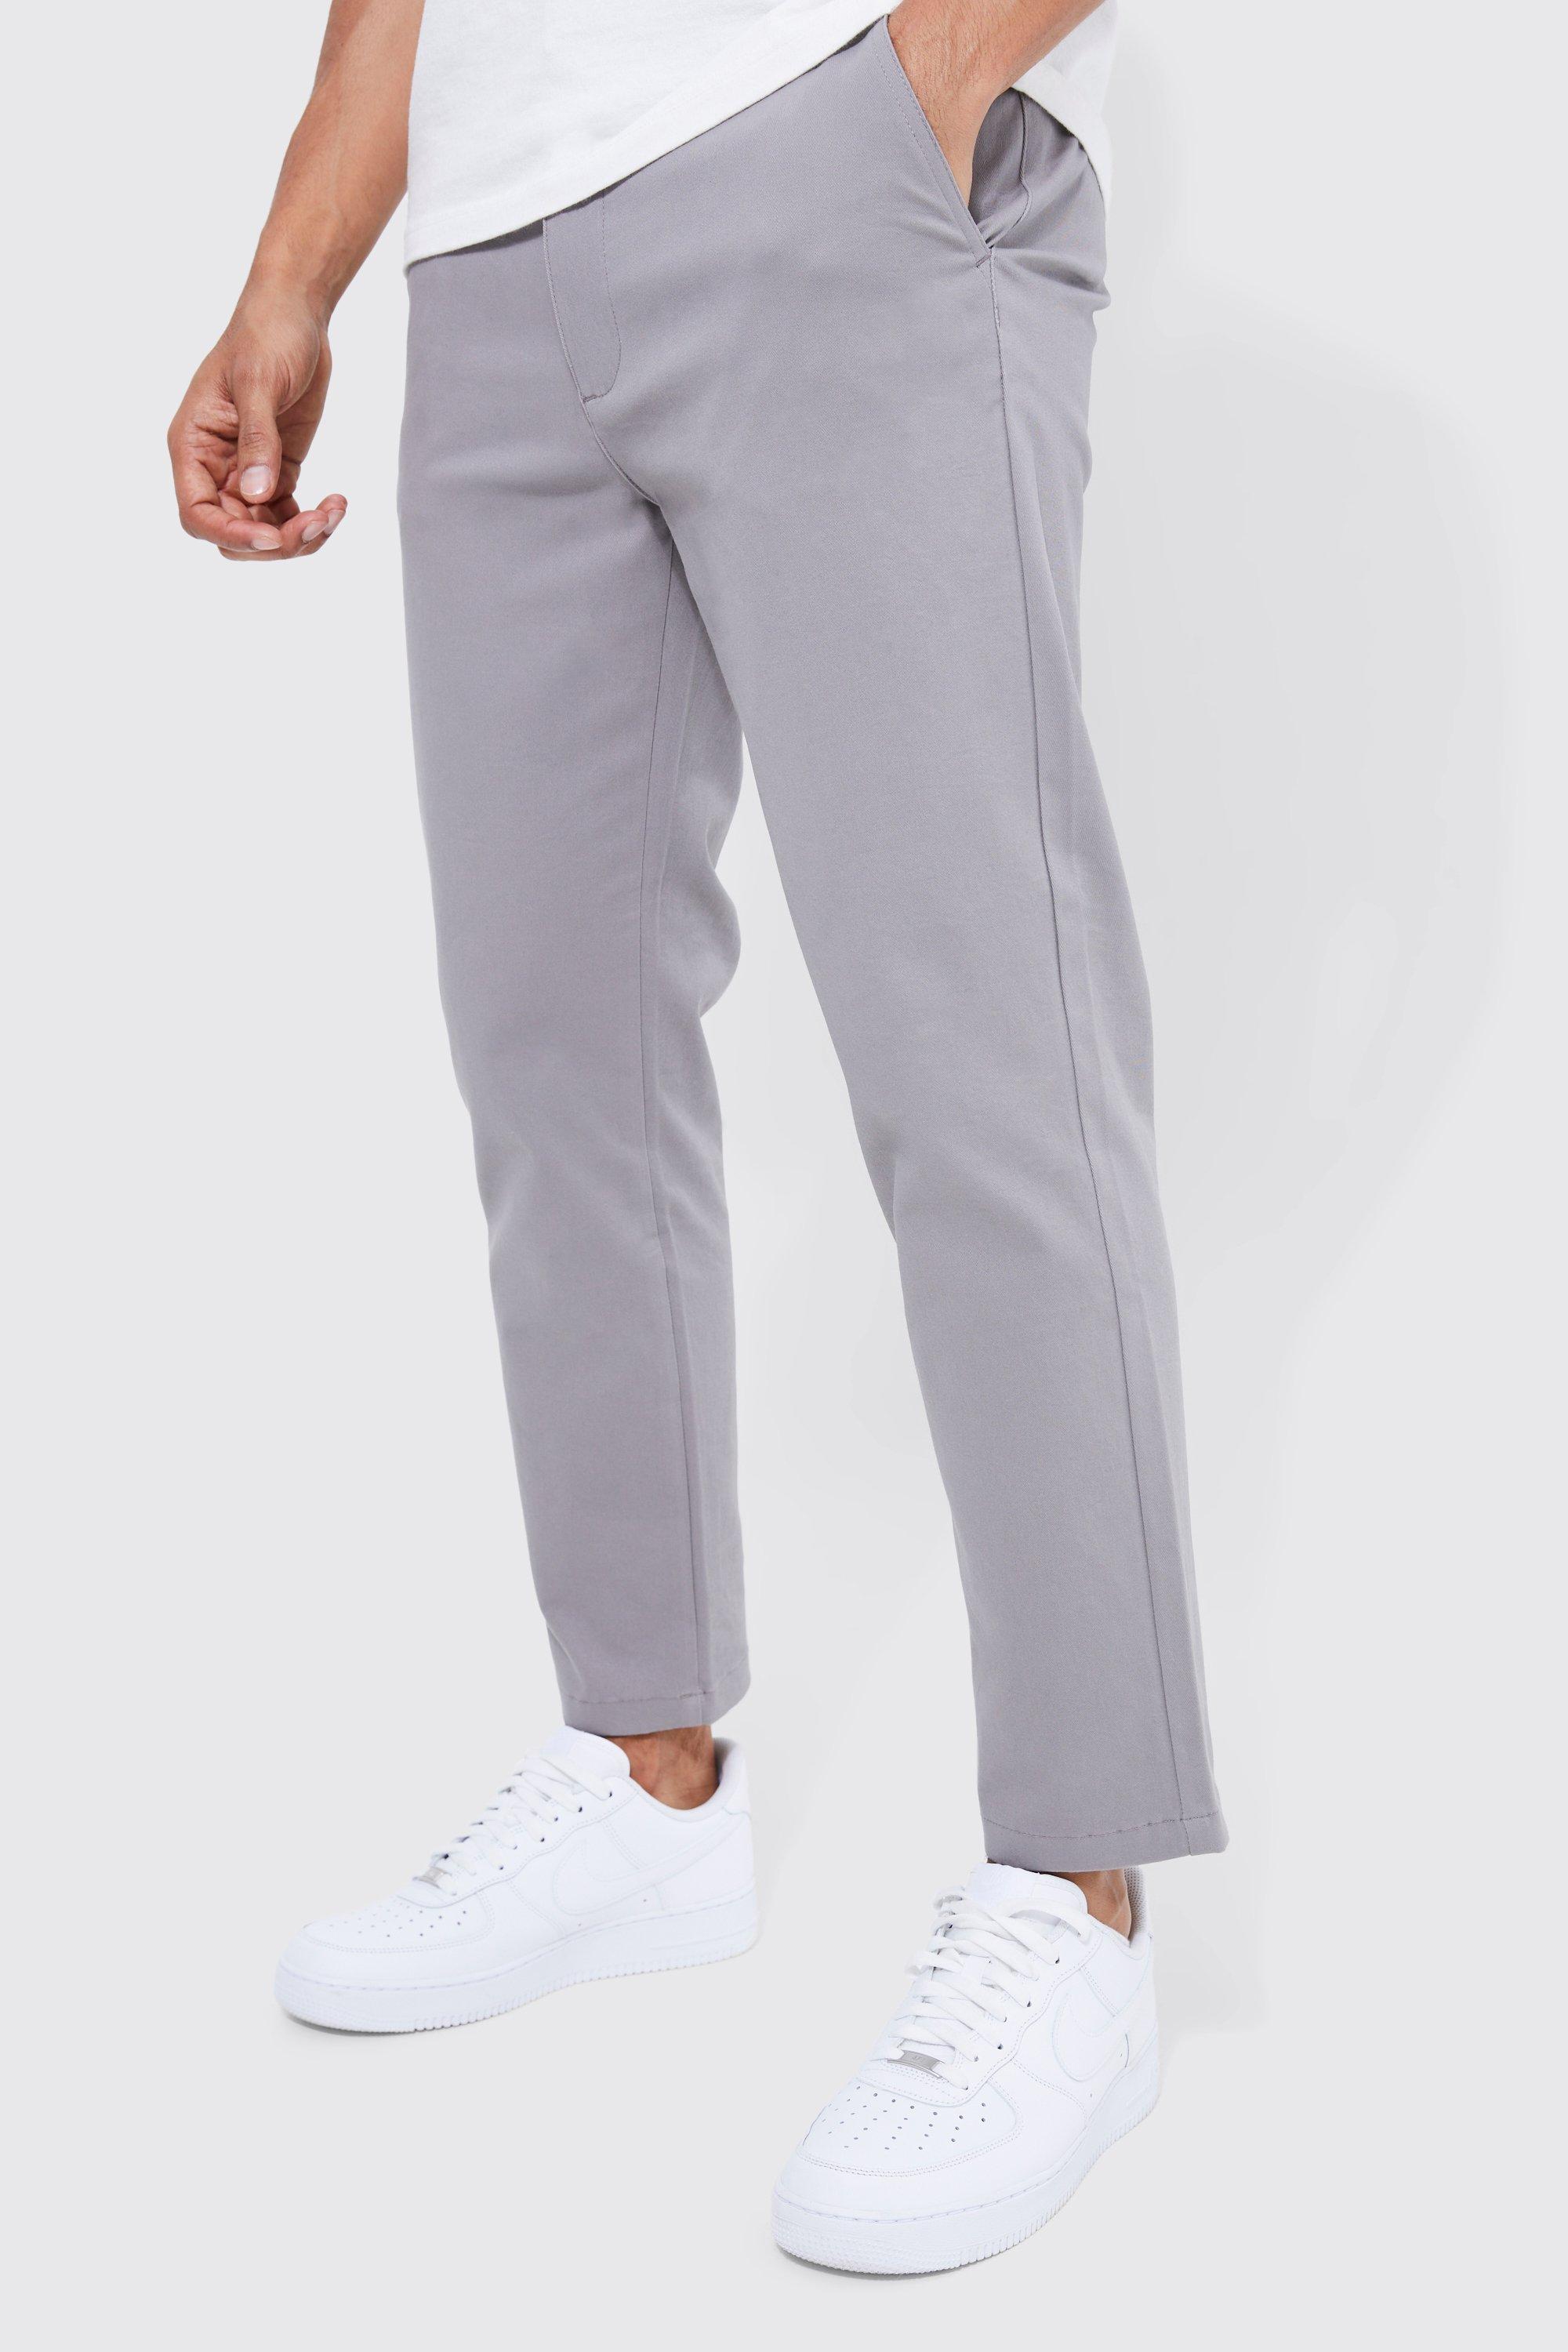 pantalon chino slim court homme - gris - 32r, gris